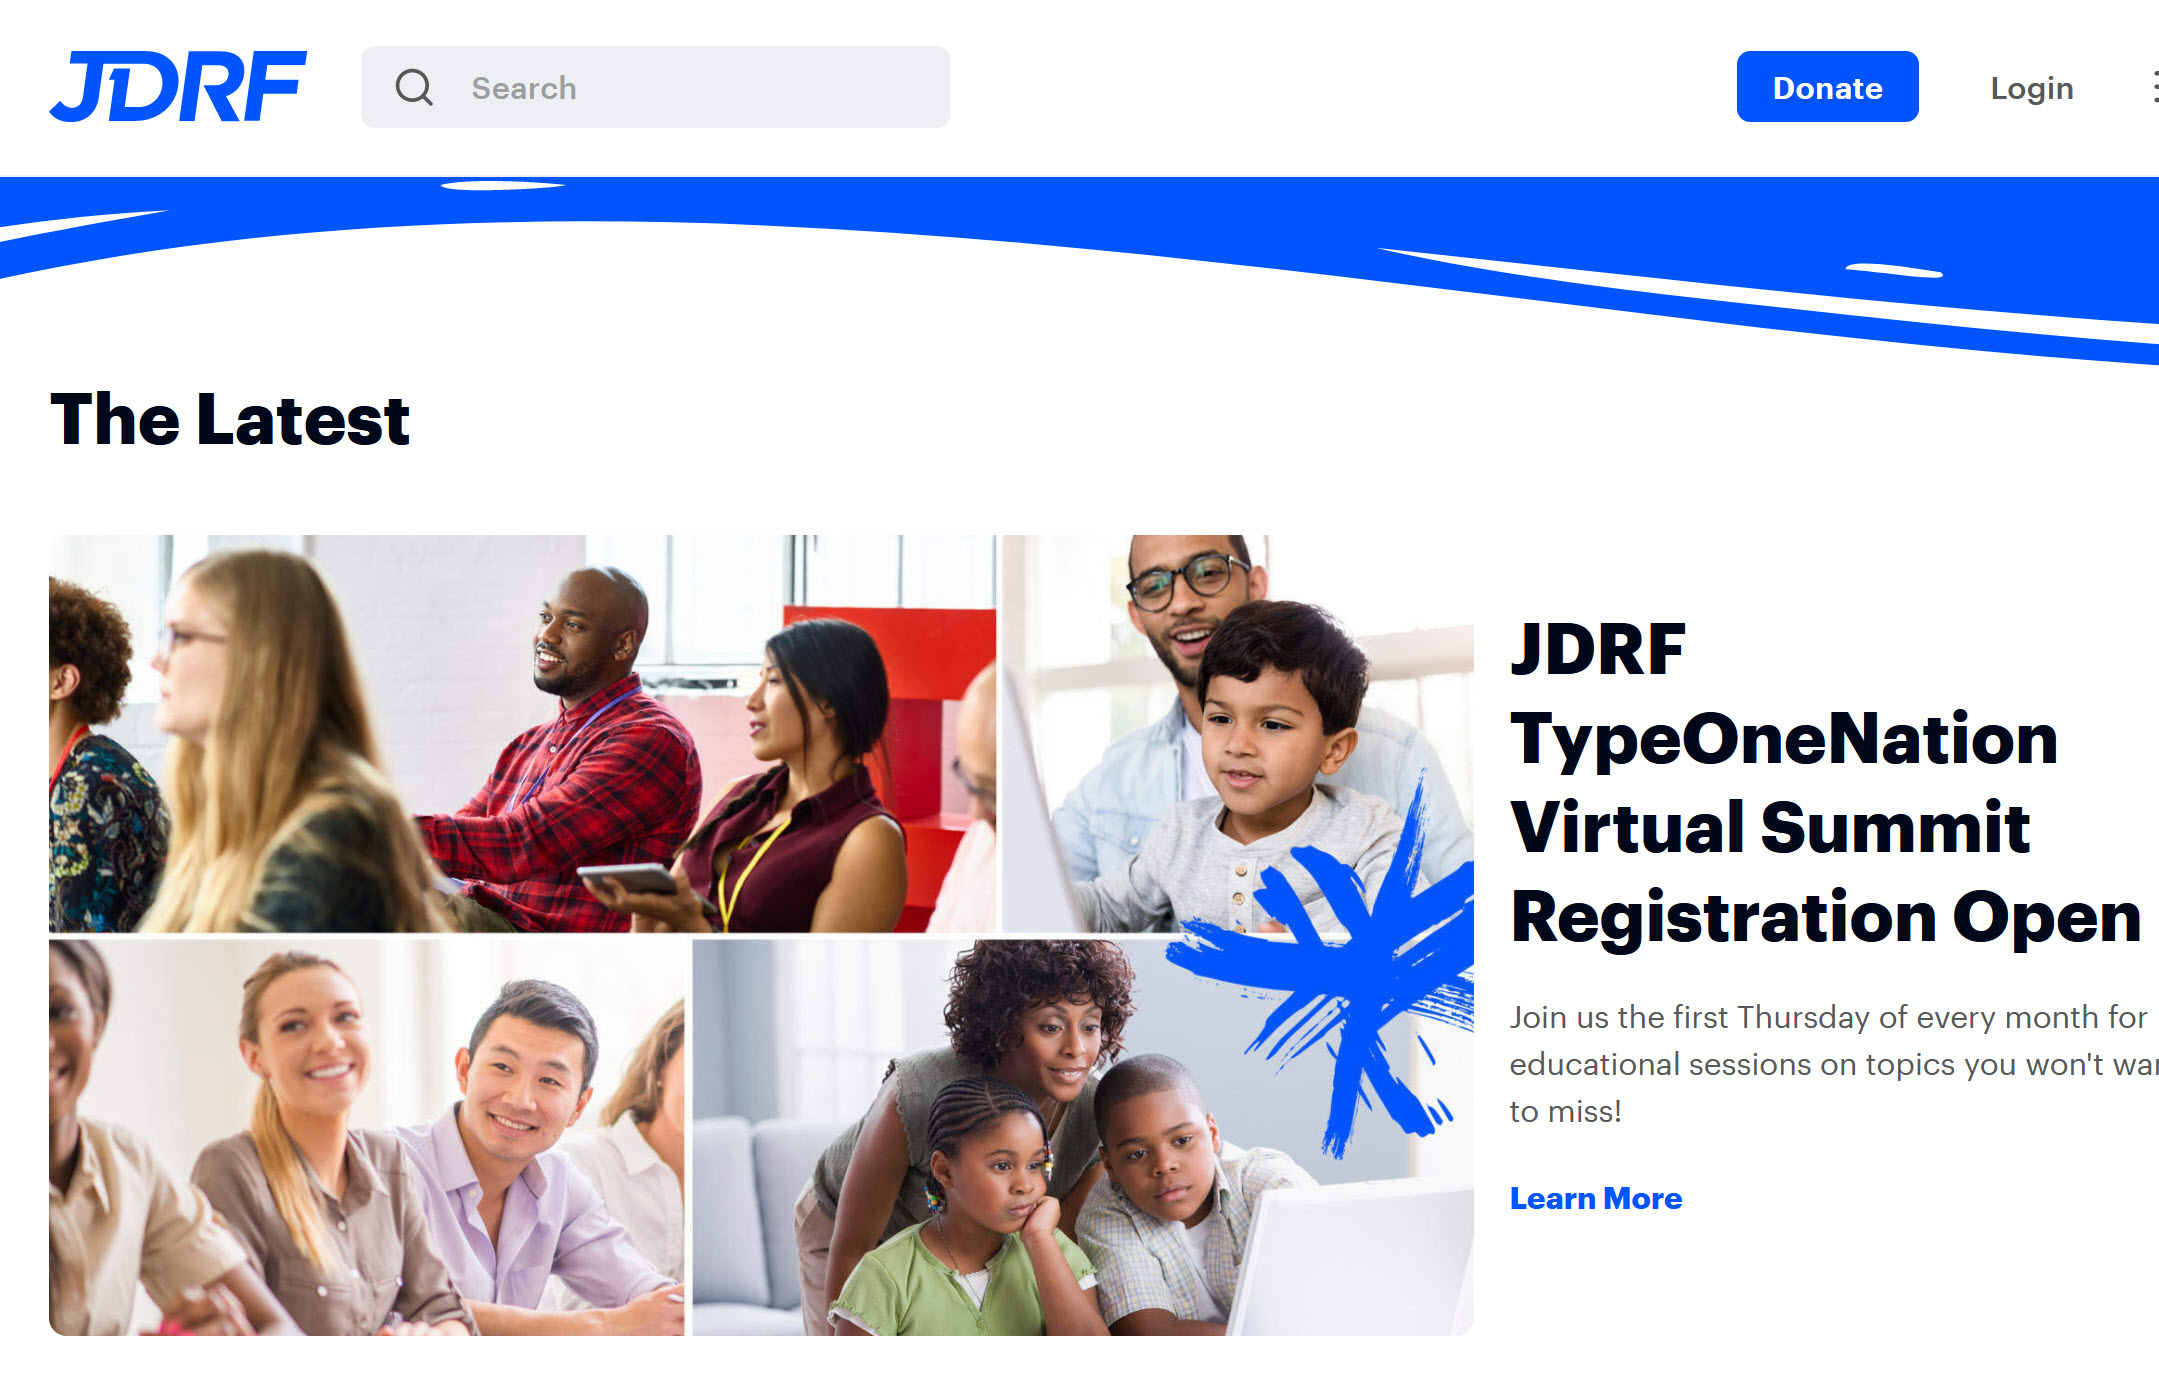 JDRF Diabetes Research